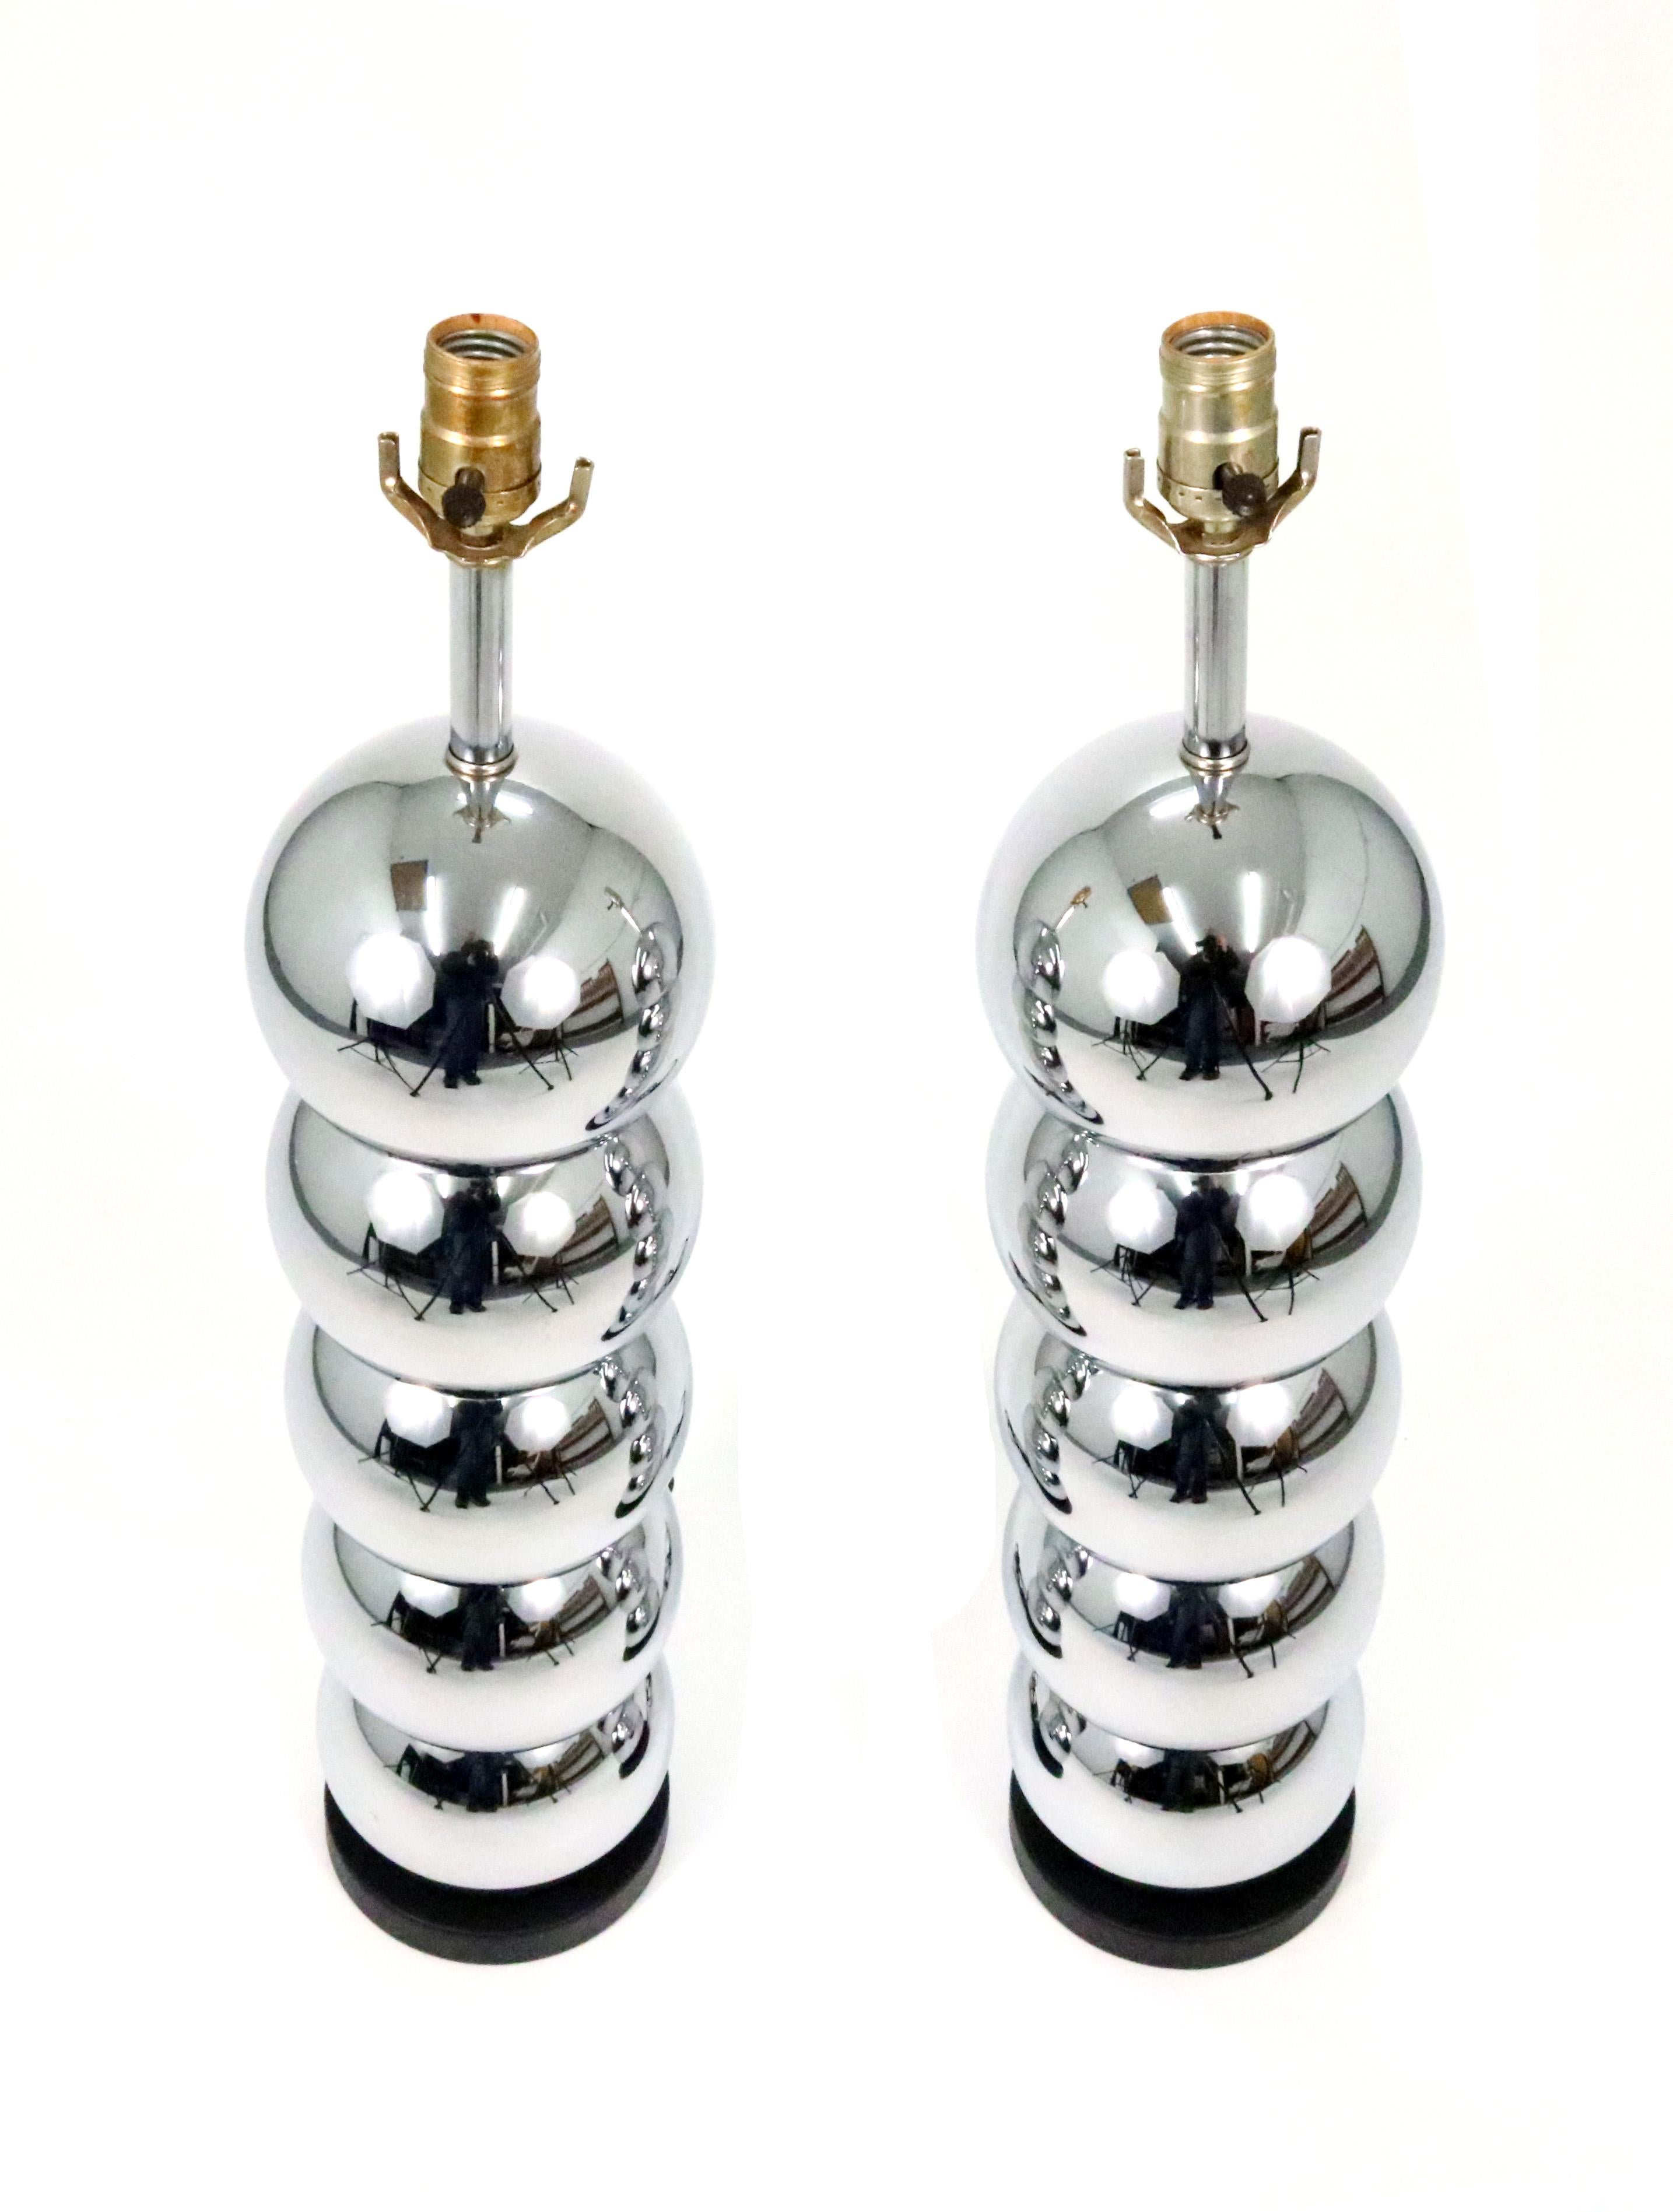 Mid-Century Modern George Kovacs Style 5-Tier Chrome Ball Lamps